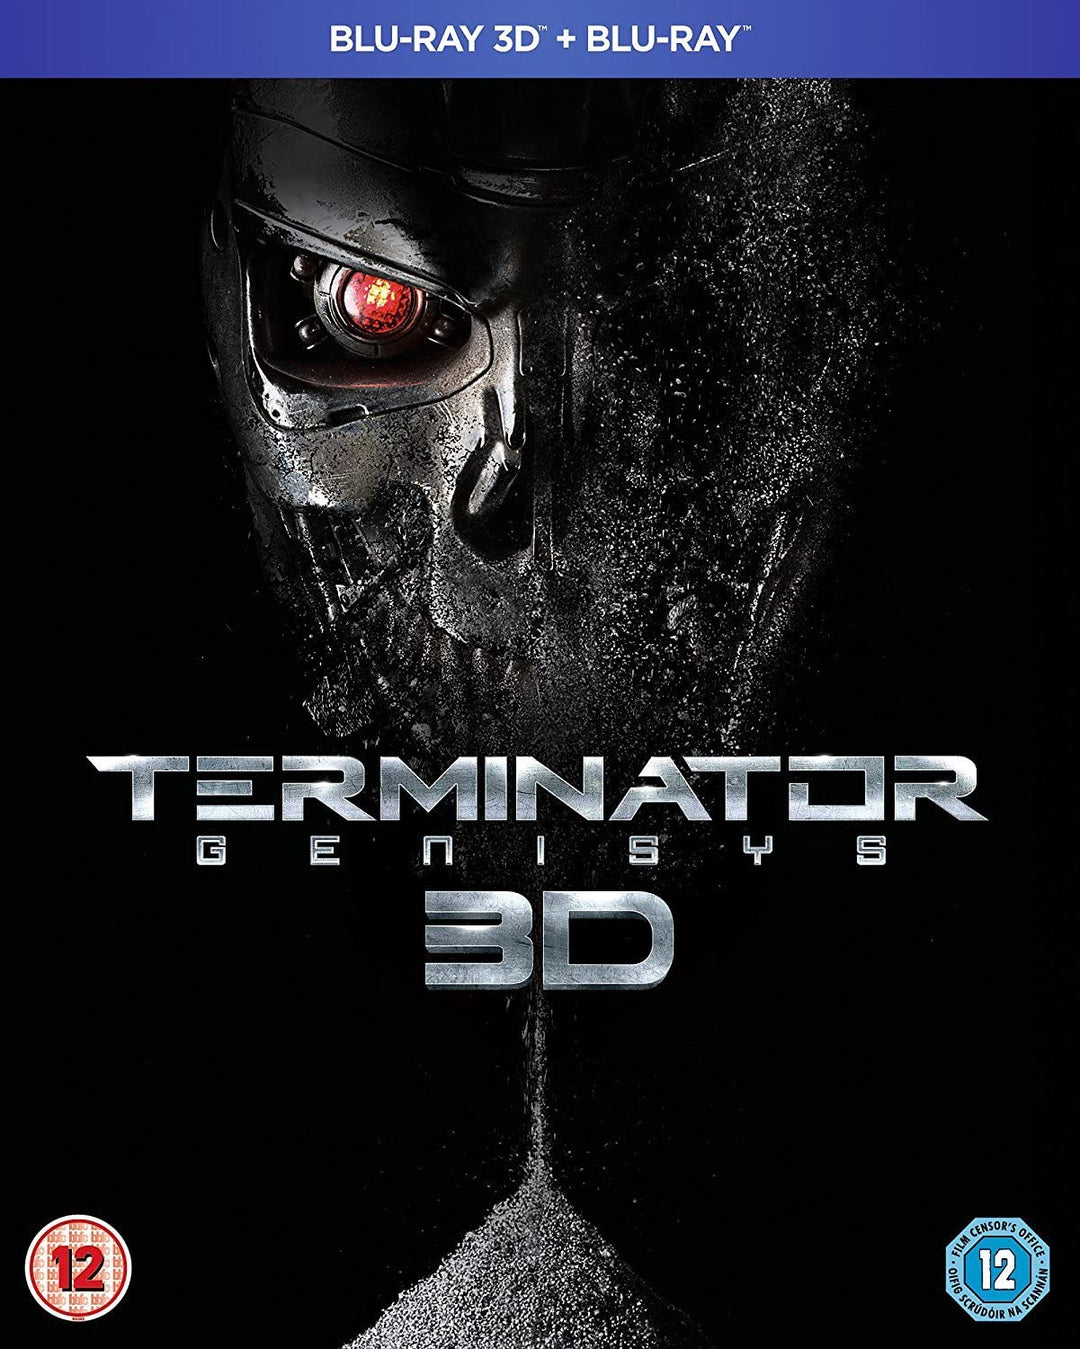 Terminator Genisys – Science-Fiction [2015] [Region Free] [Blu-ray]